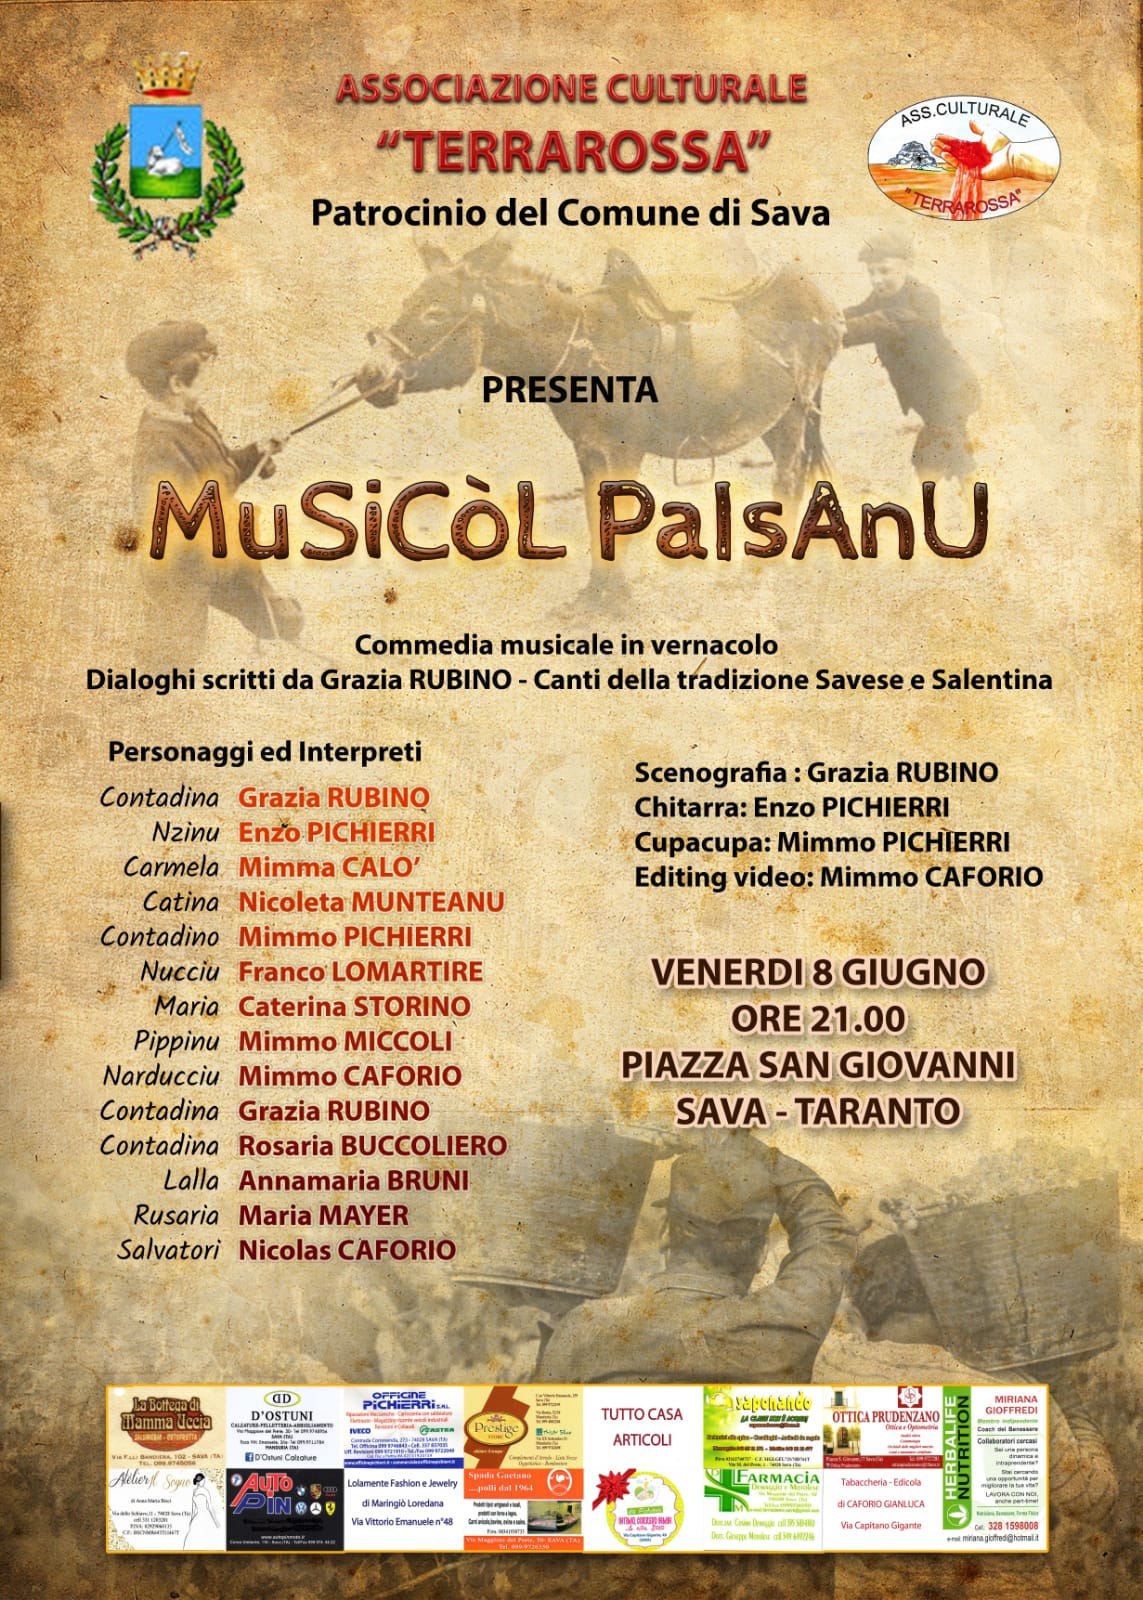 SAVA. “MuSiCòL PaIsAnU”, commedia musicale in vernacolo